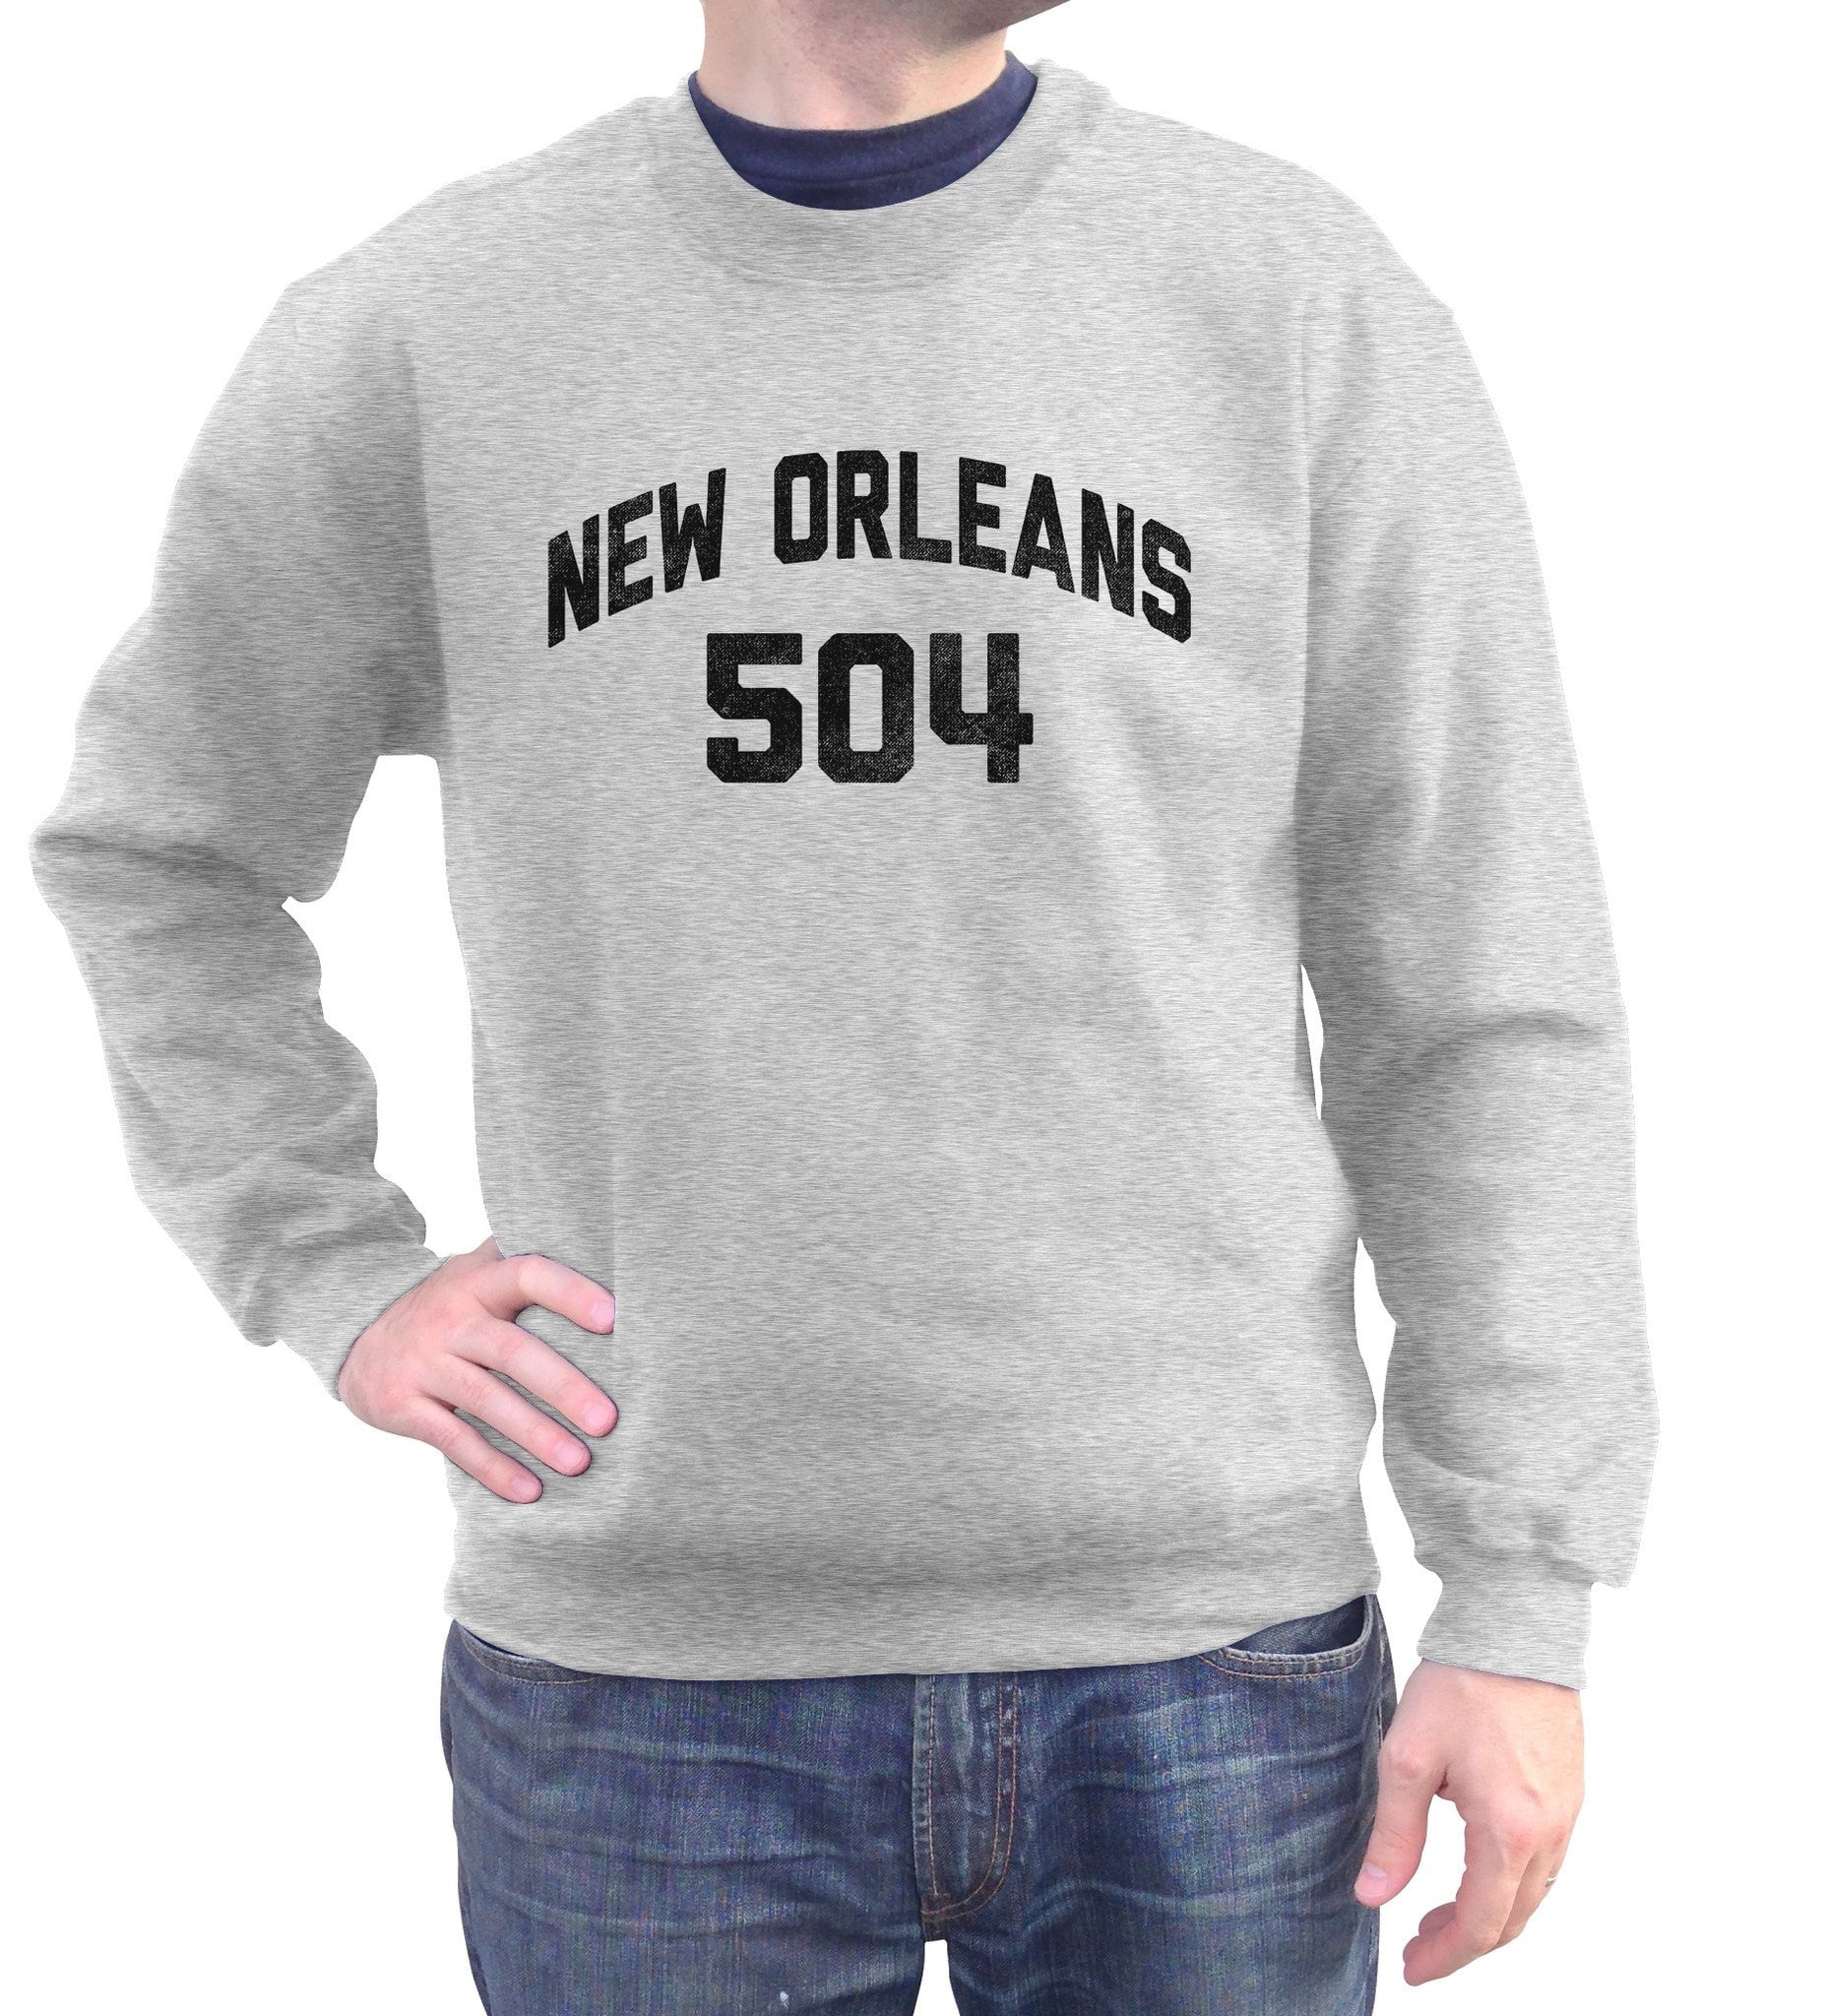 Unisex New Orleans 504 Area Code Sweatshirt